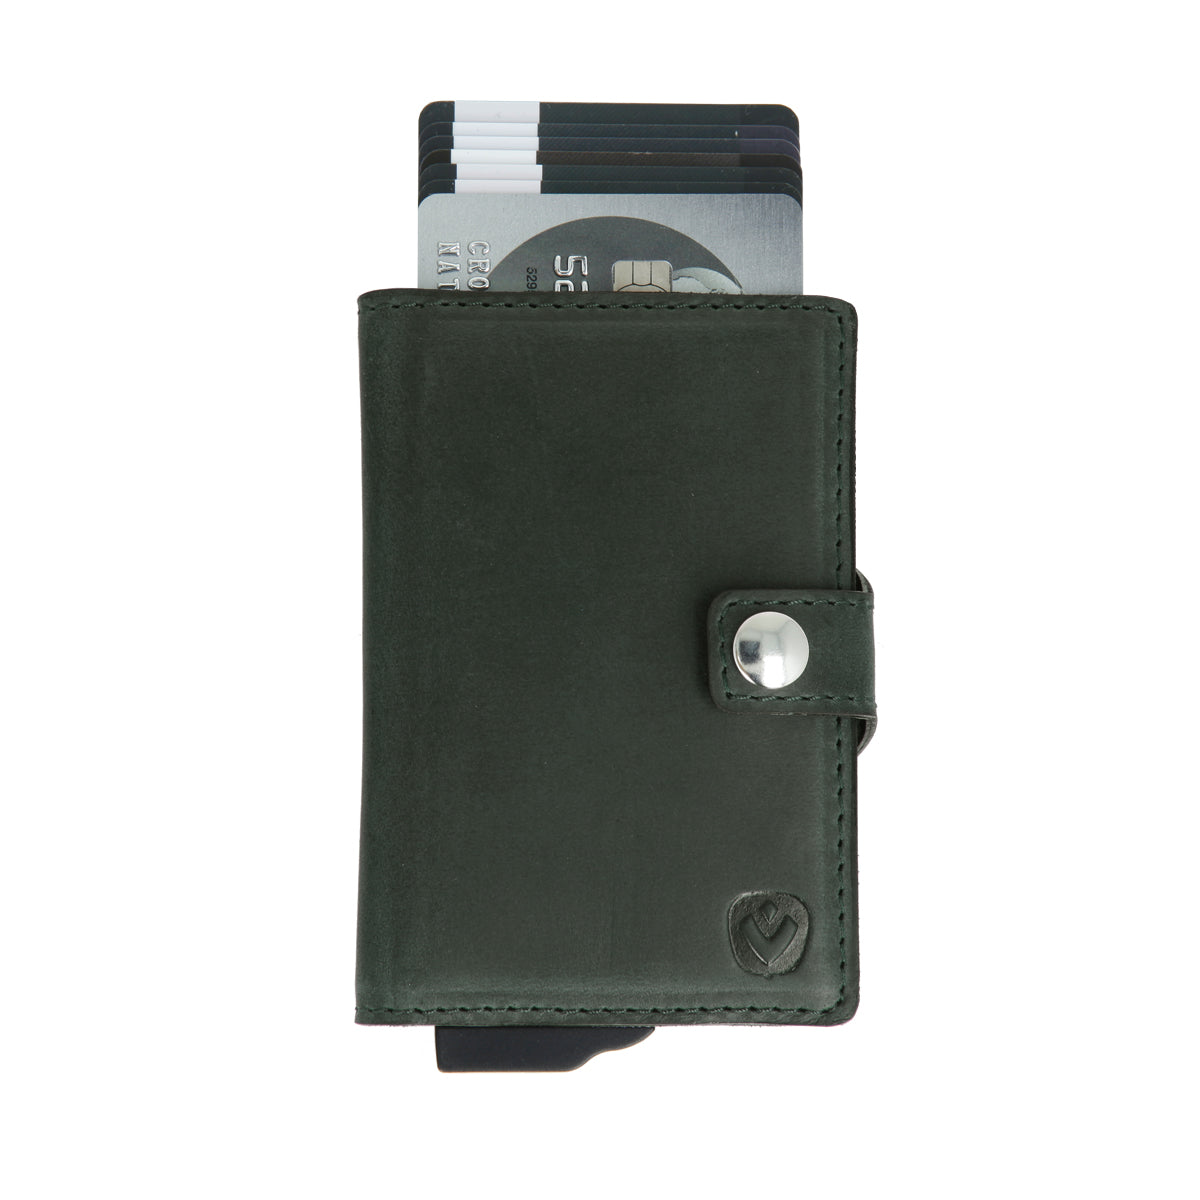 Card Case Plus Wallet Vintage Green